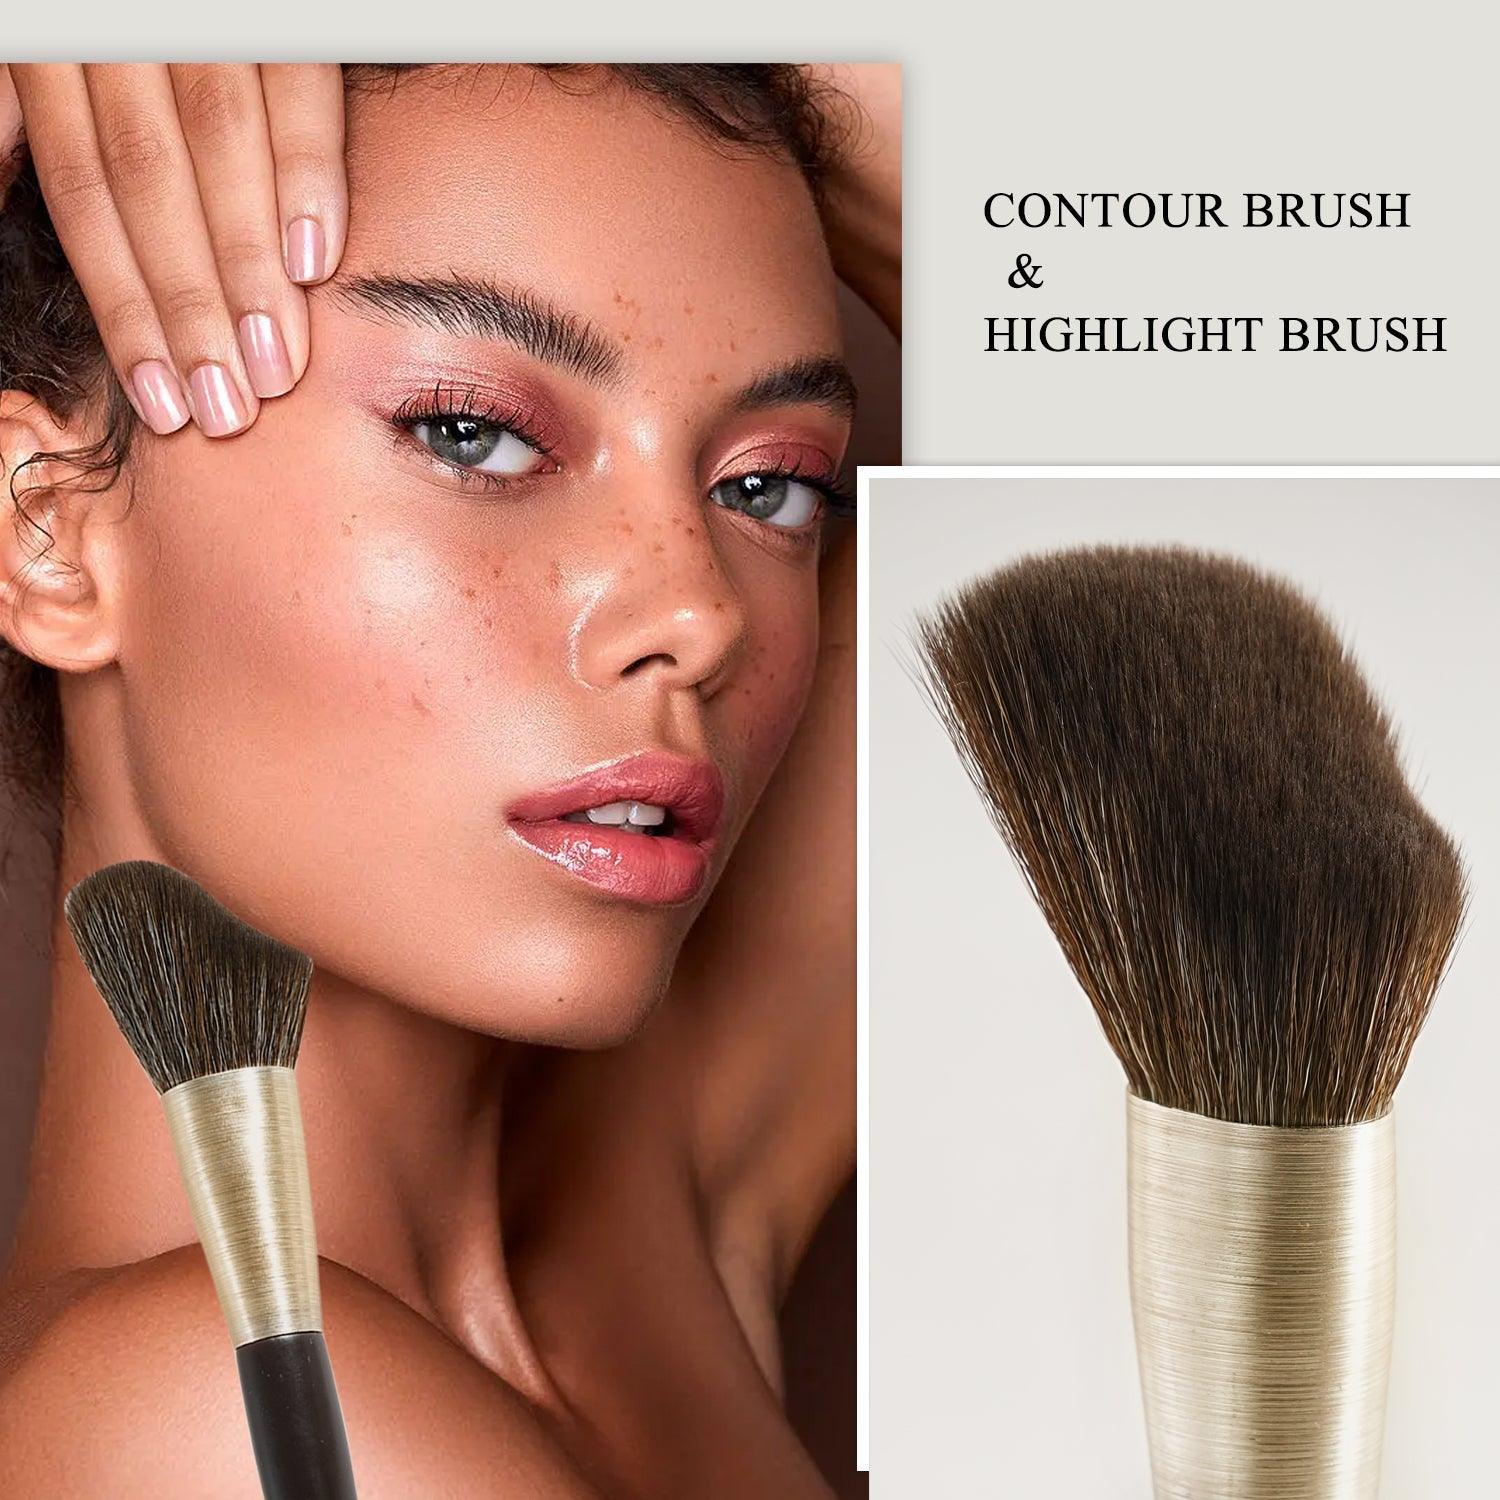 BEILI 10Pcs Makeup Brushes Kit,Professional Premium Make up Brushes Set/ MA10/MC10/MD10 - BEILI Official Shop